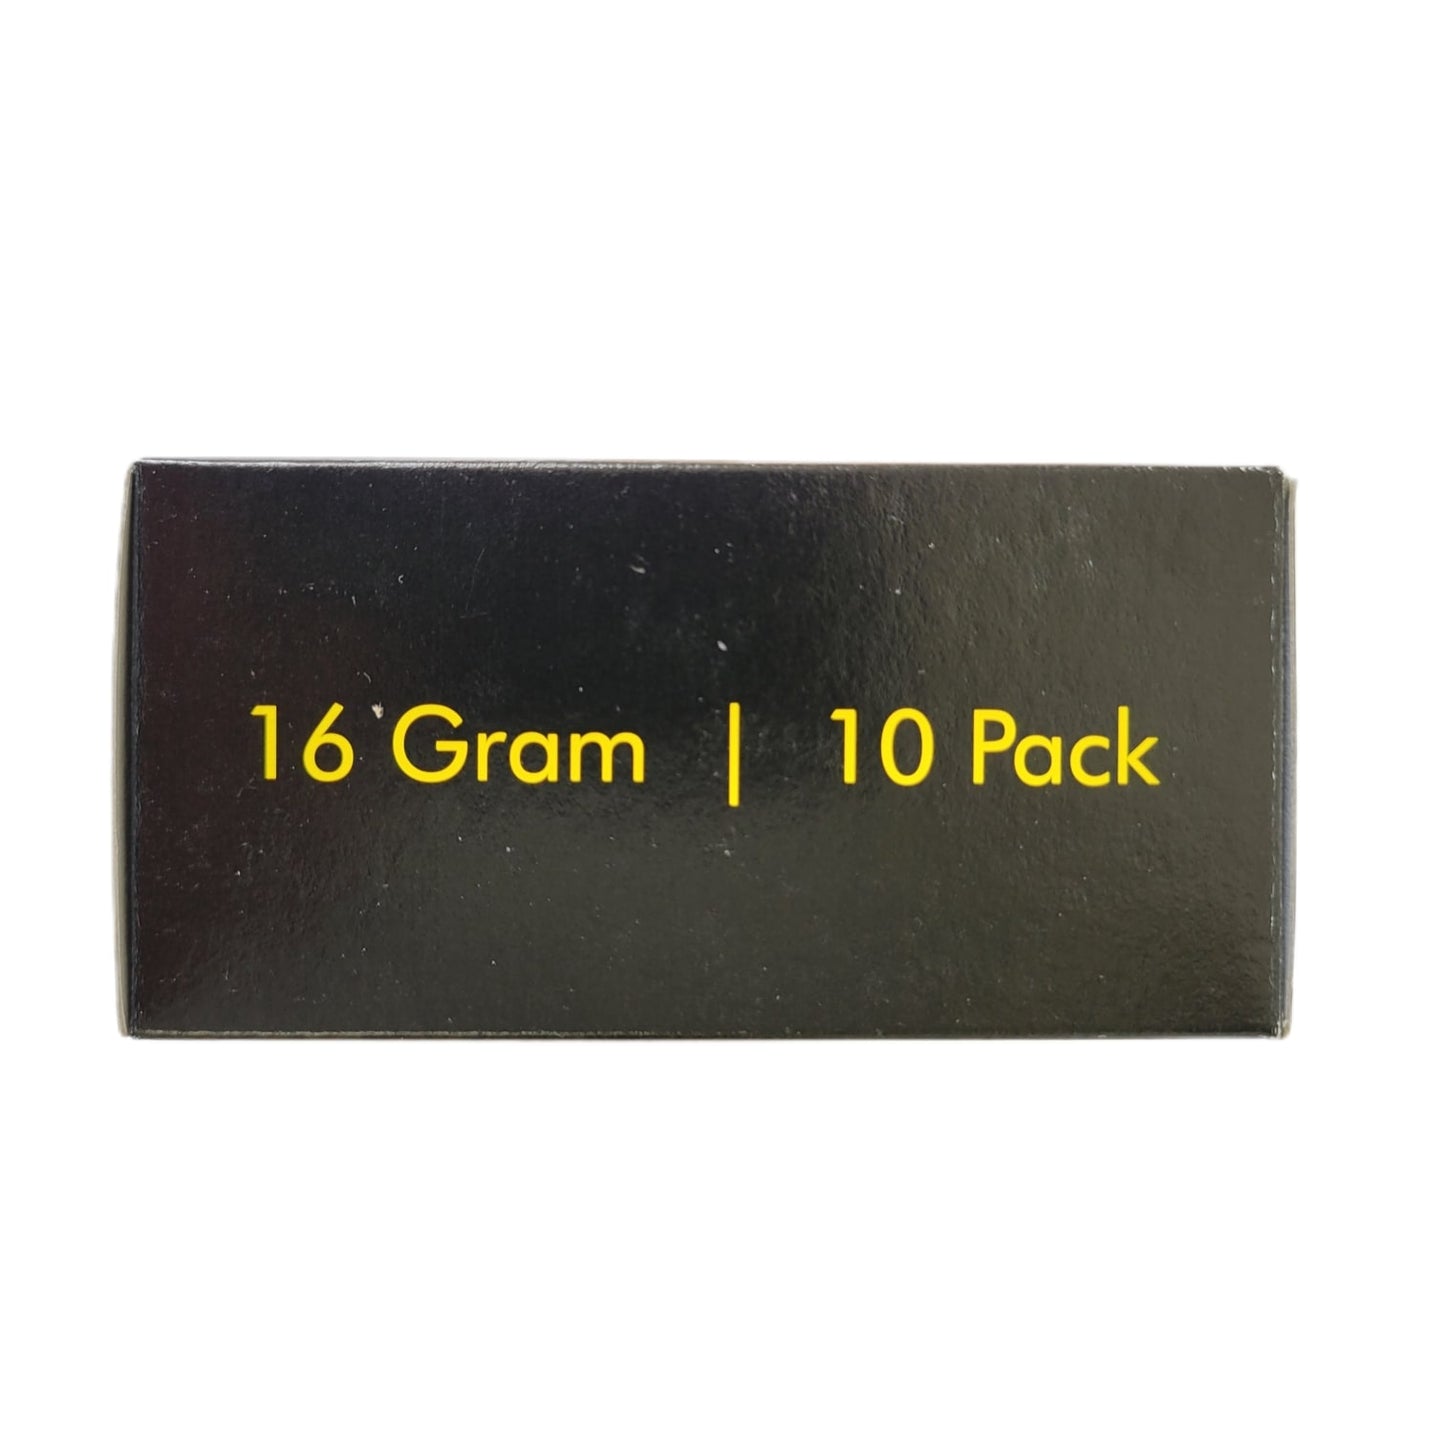 16 Gram CO2 Cartridges (10-pack)